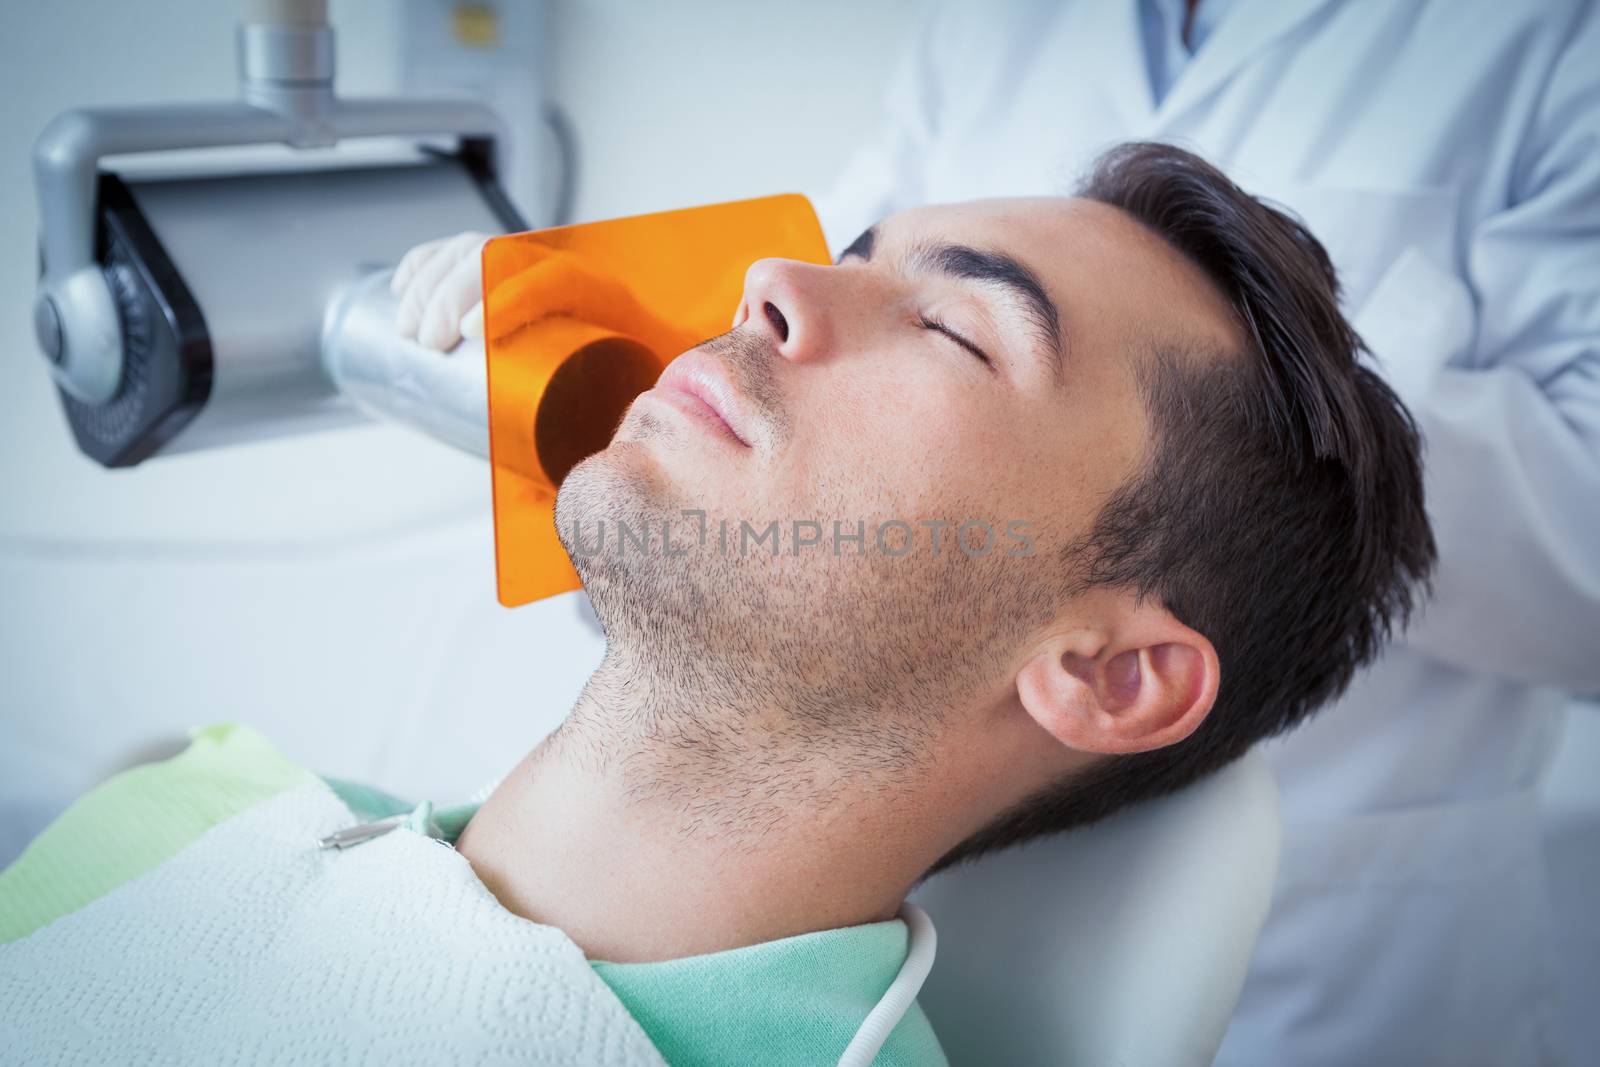 Young man undergoing dental checkup by Wavebreakmedia